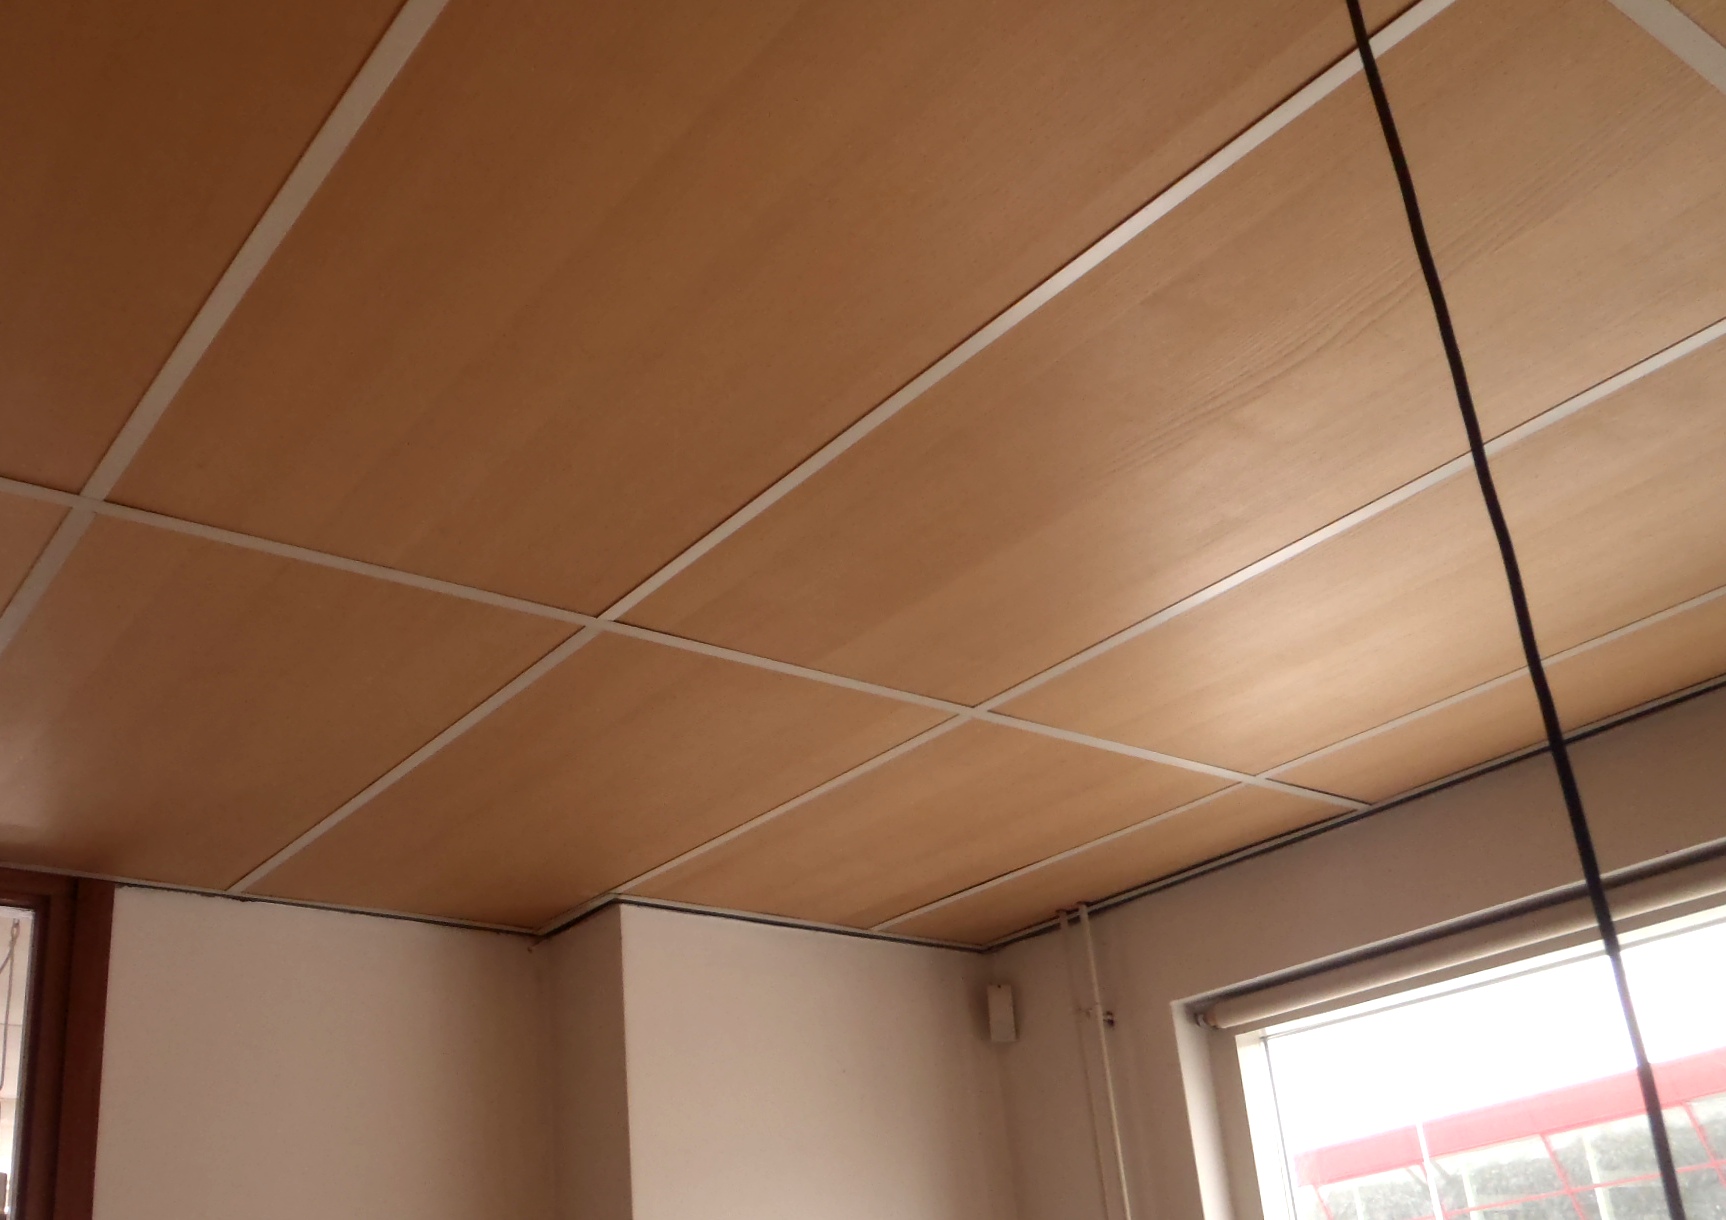 Bevatten Pa Worstelen emmen plafondplaten / systeemplafondplaten goedkoop | plaatmateriaal outlet